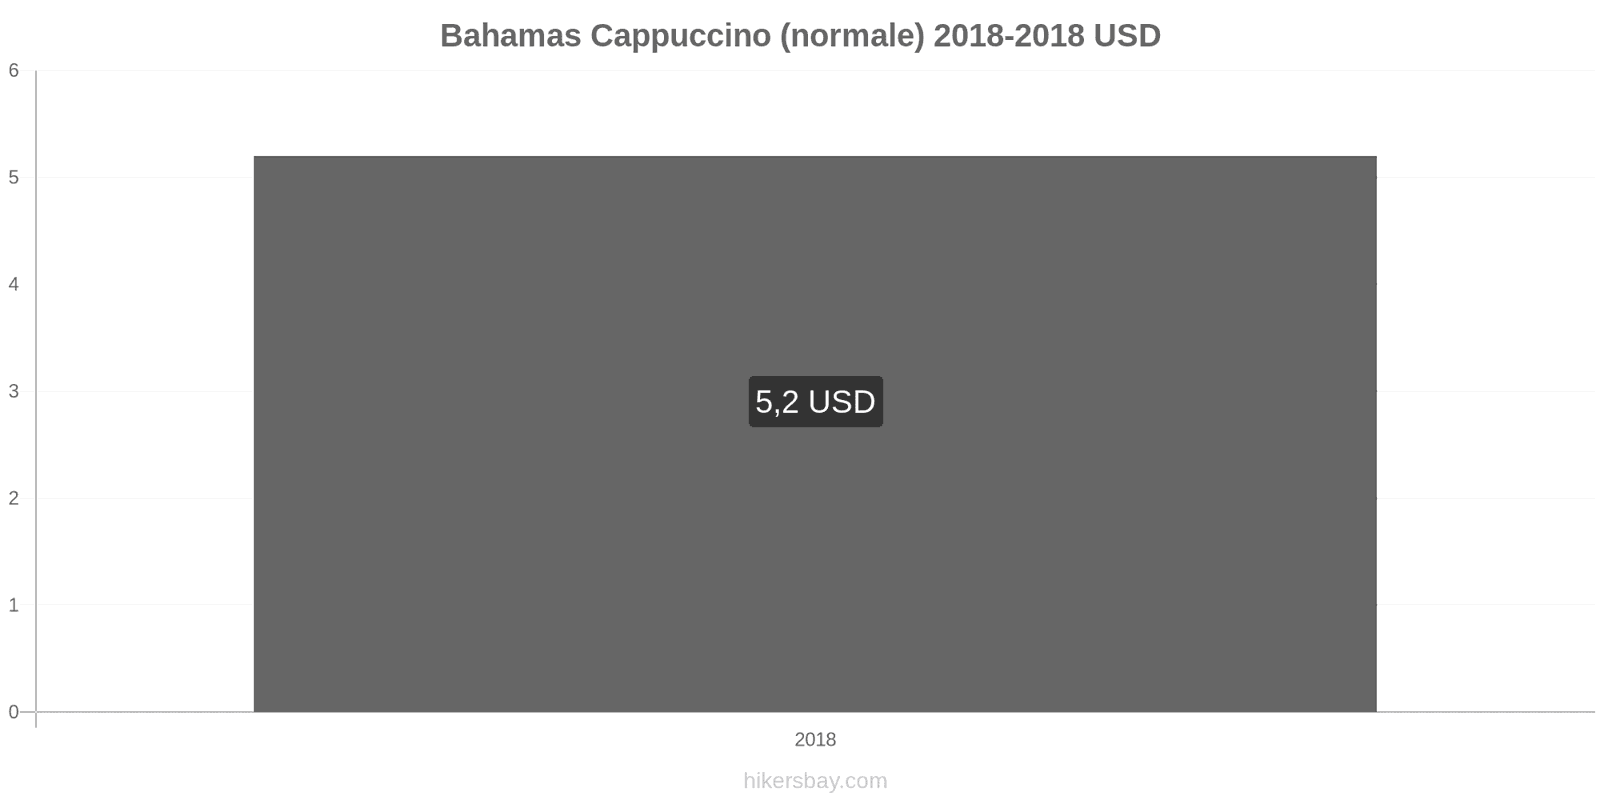 Bahamas cambi di prezzo Cappuccino hikersbay.com